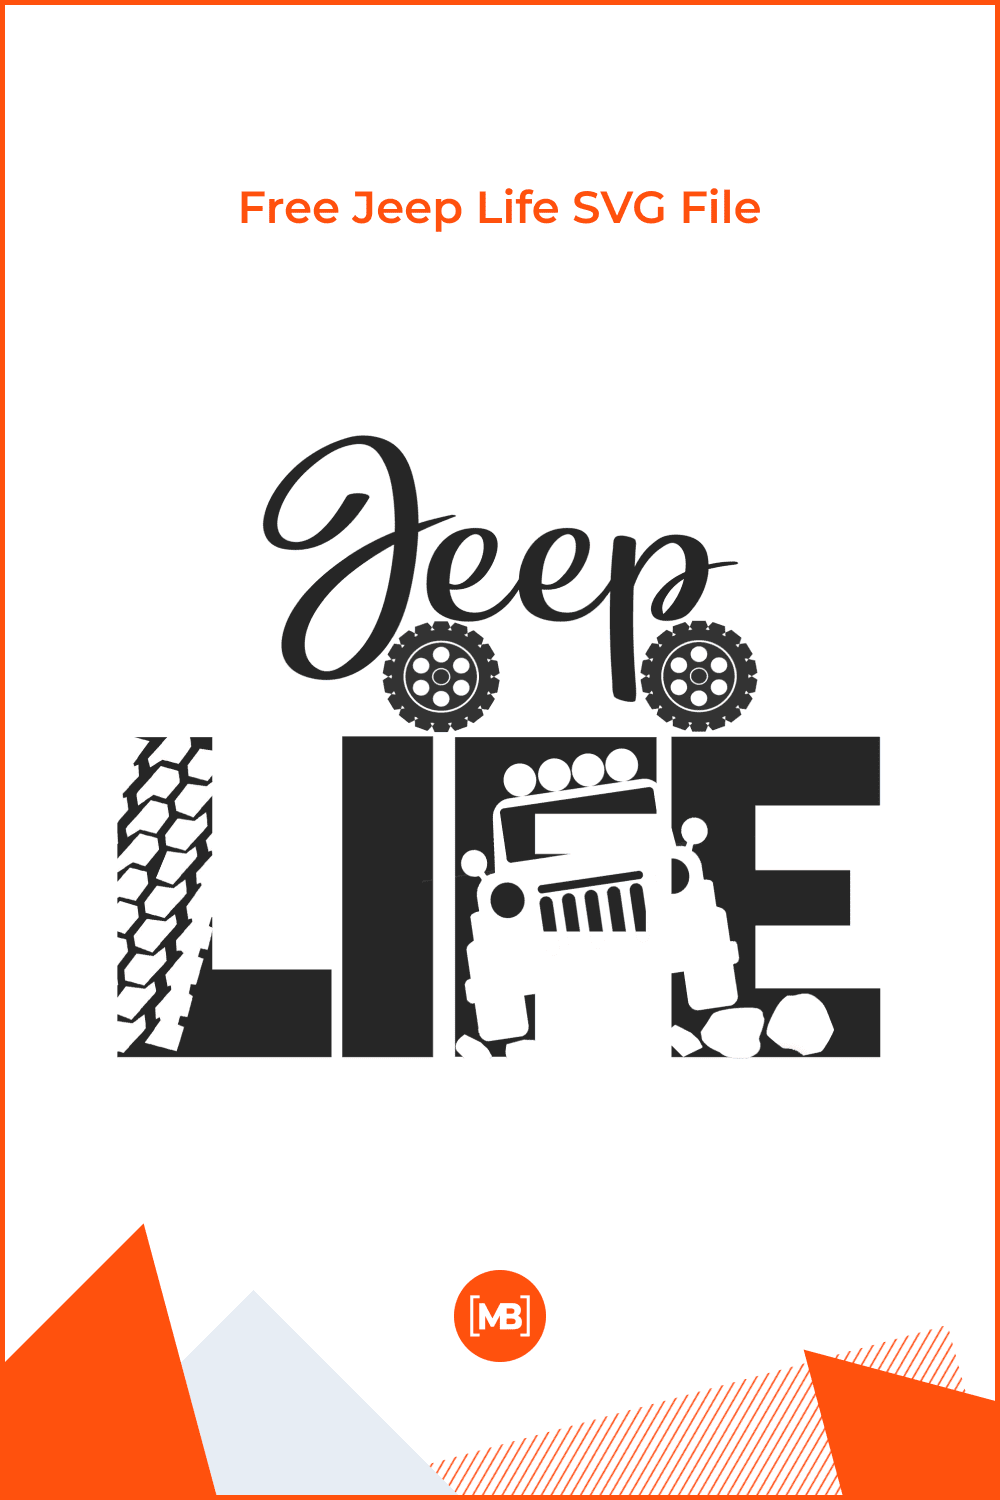 Free Jeep Life SVG File.